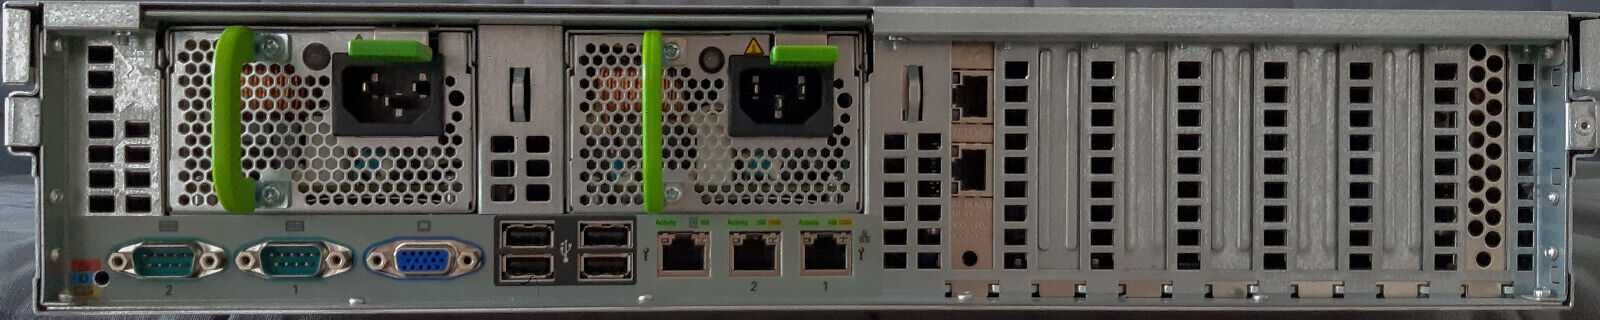 Server Rack Fujitsu Primergy RX300 S6